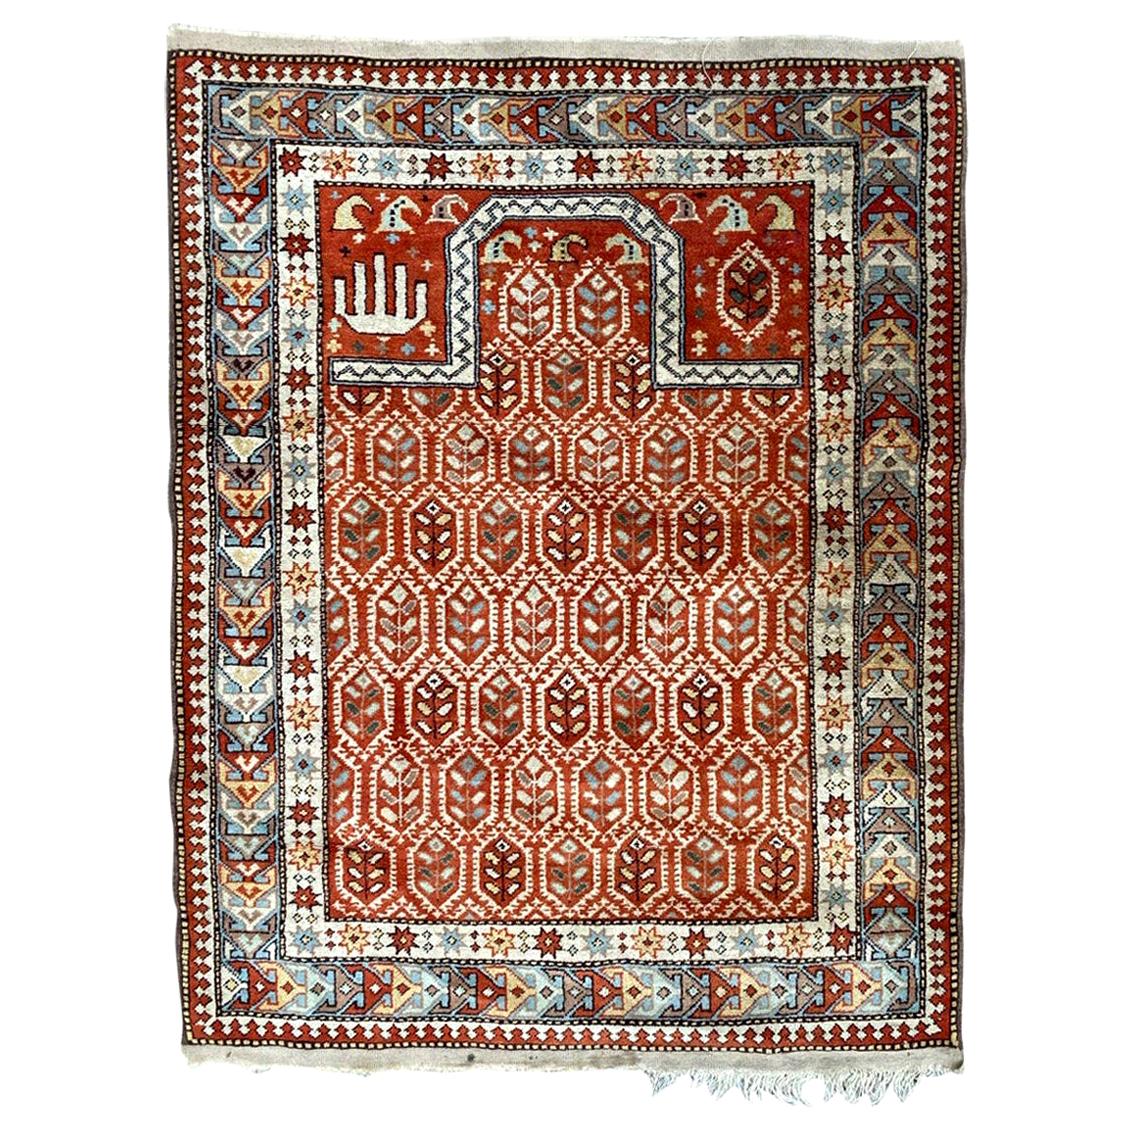 Bobyrug’s Beautiful Vintage Turkish Prayer Rug